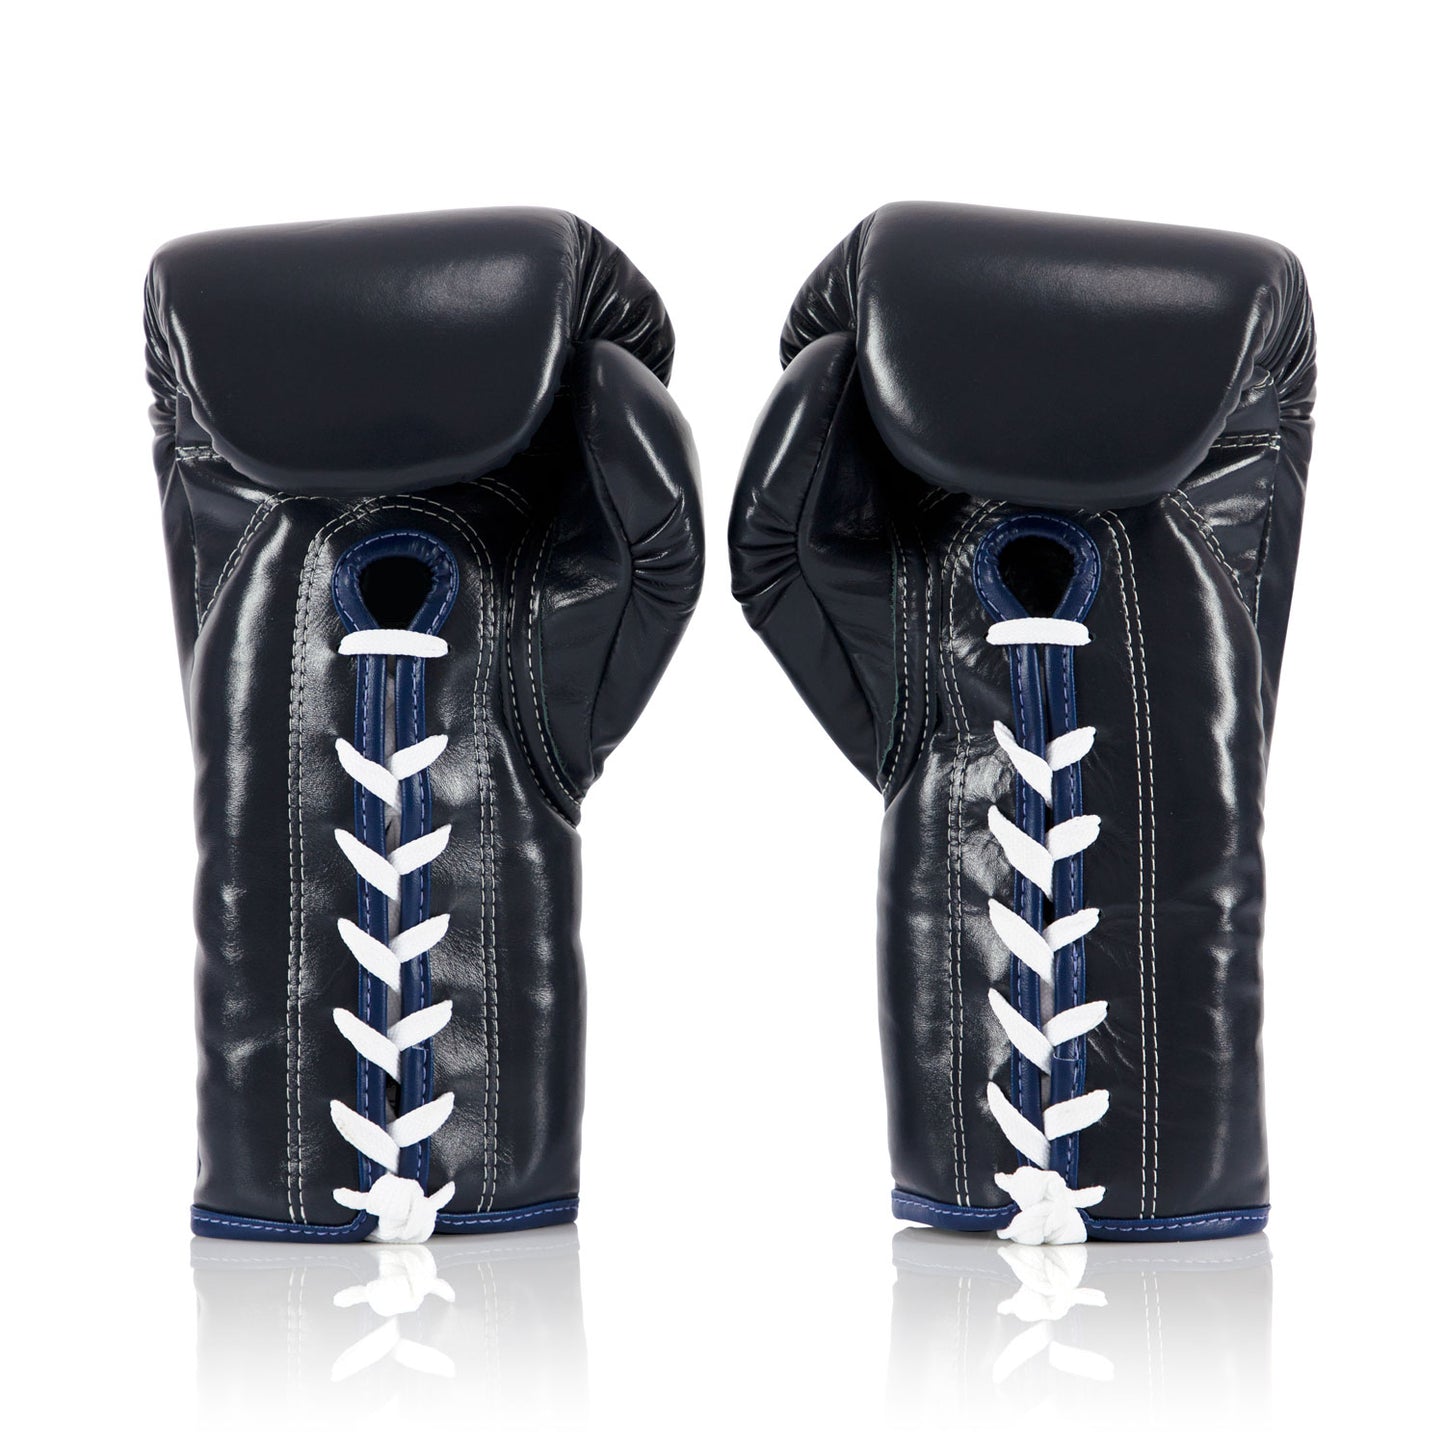 Fairtex Pro BGL 6 Blue Lace-Up Boxing Gloves